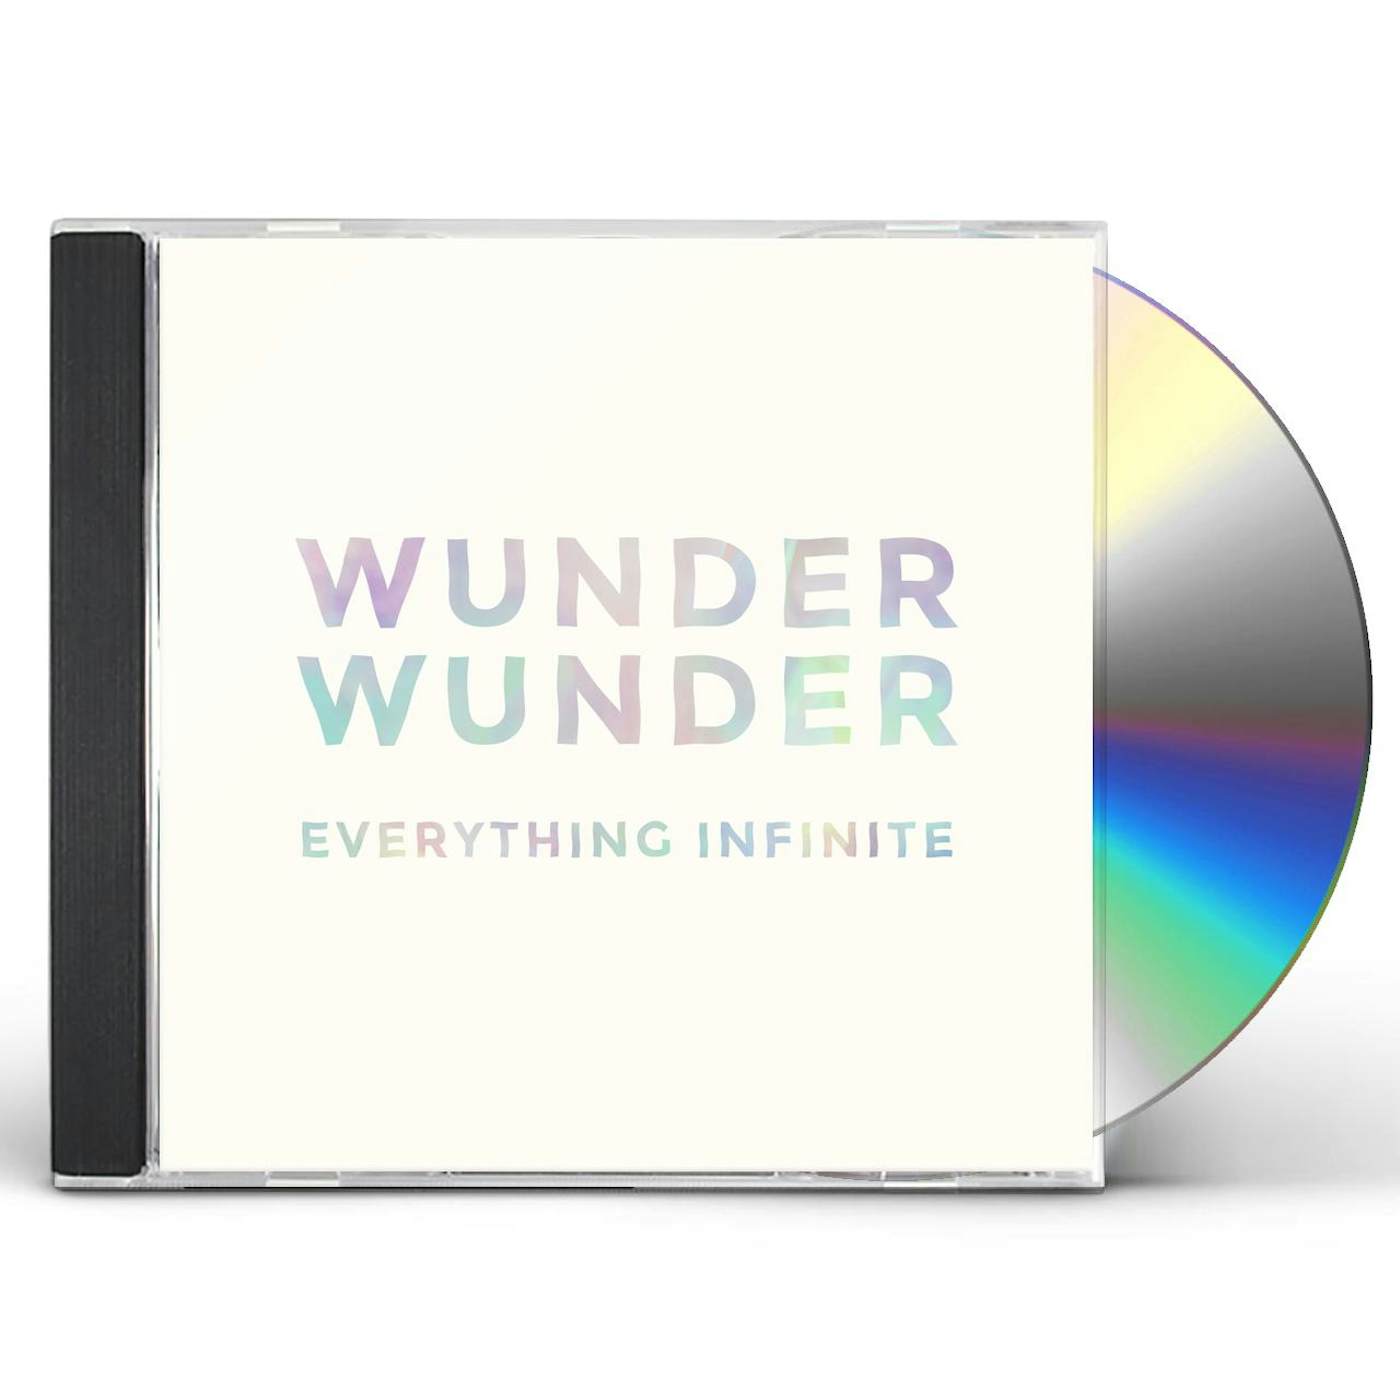 Wunder Wunder EVERYTHING INFINITE CD